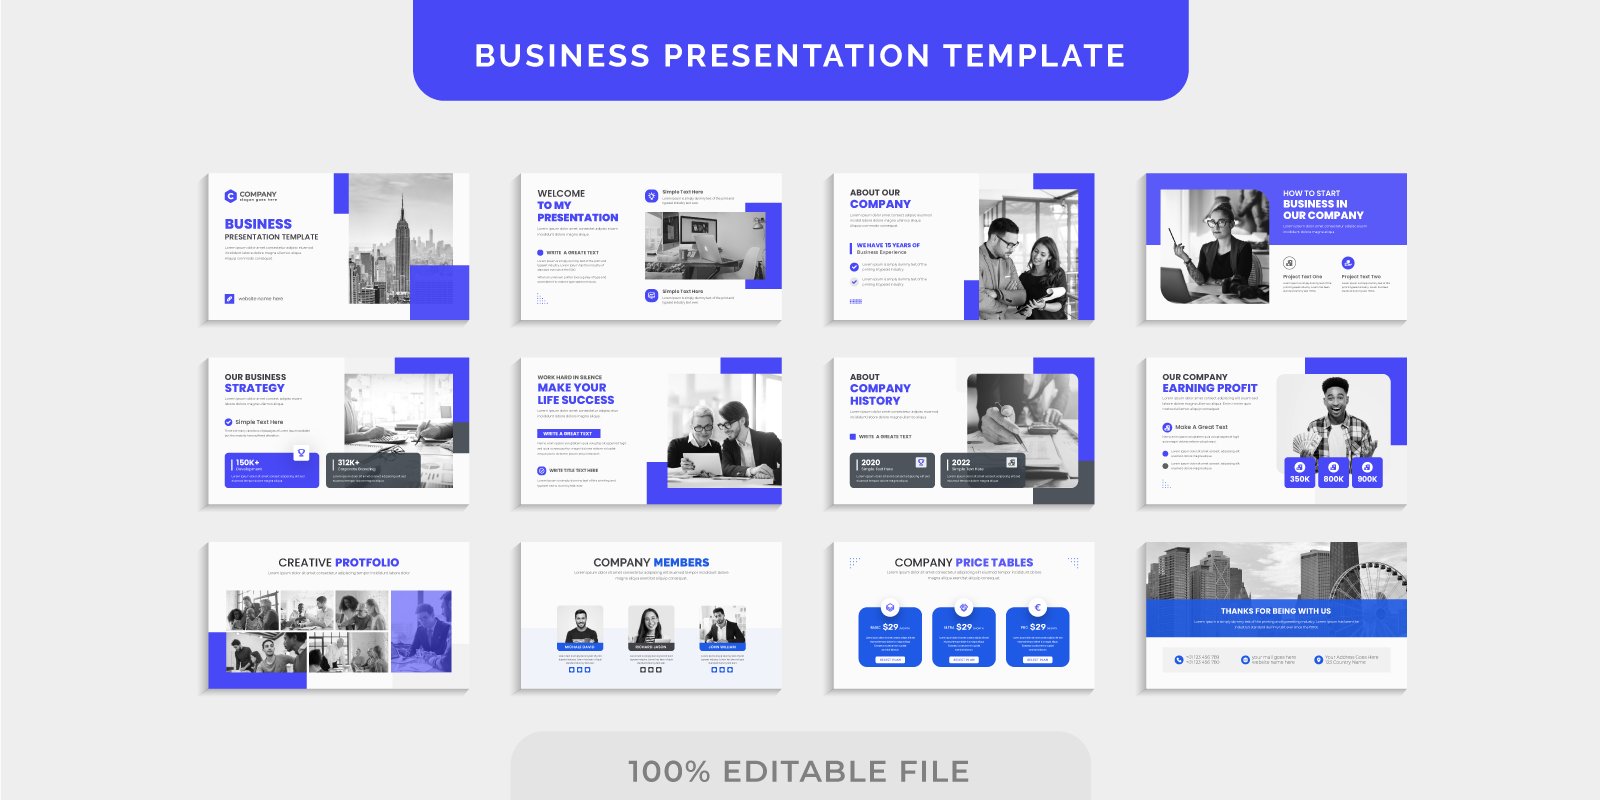 Creative Corporate Agency business presentation slides Design template